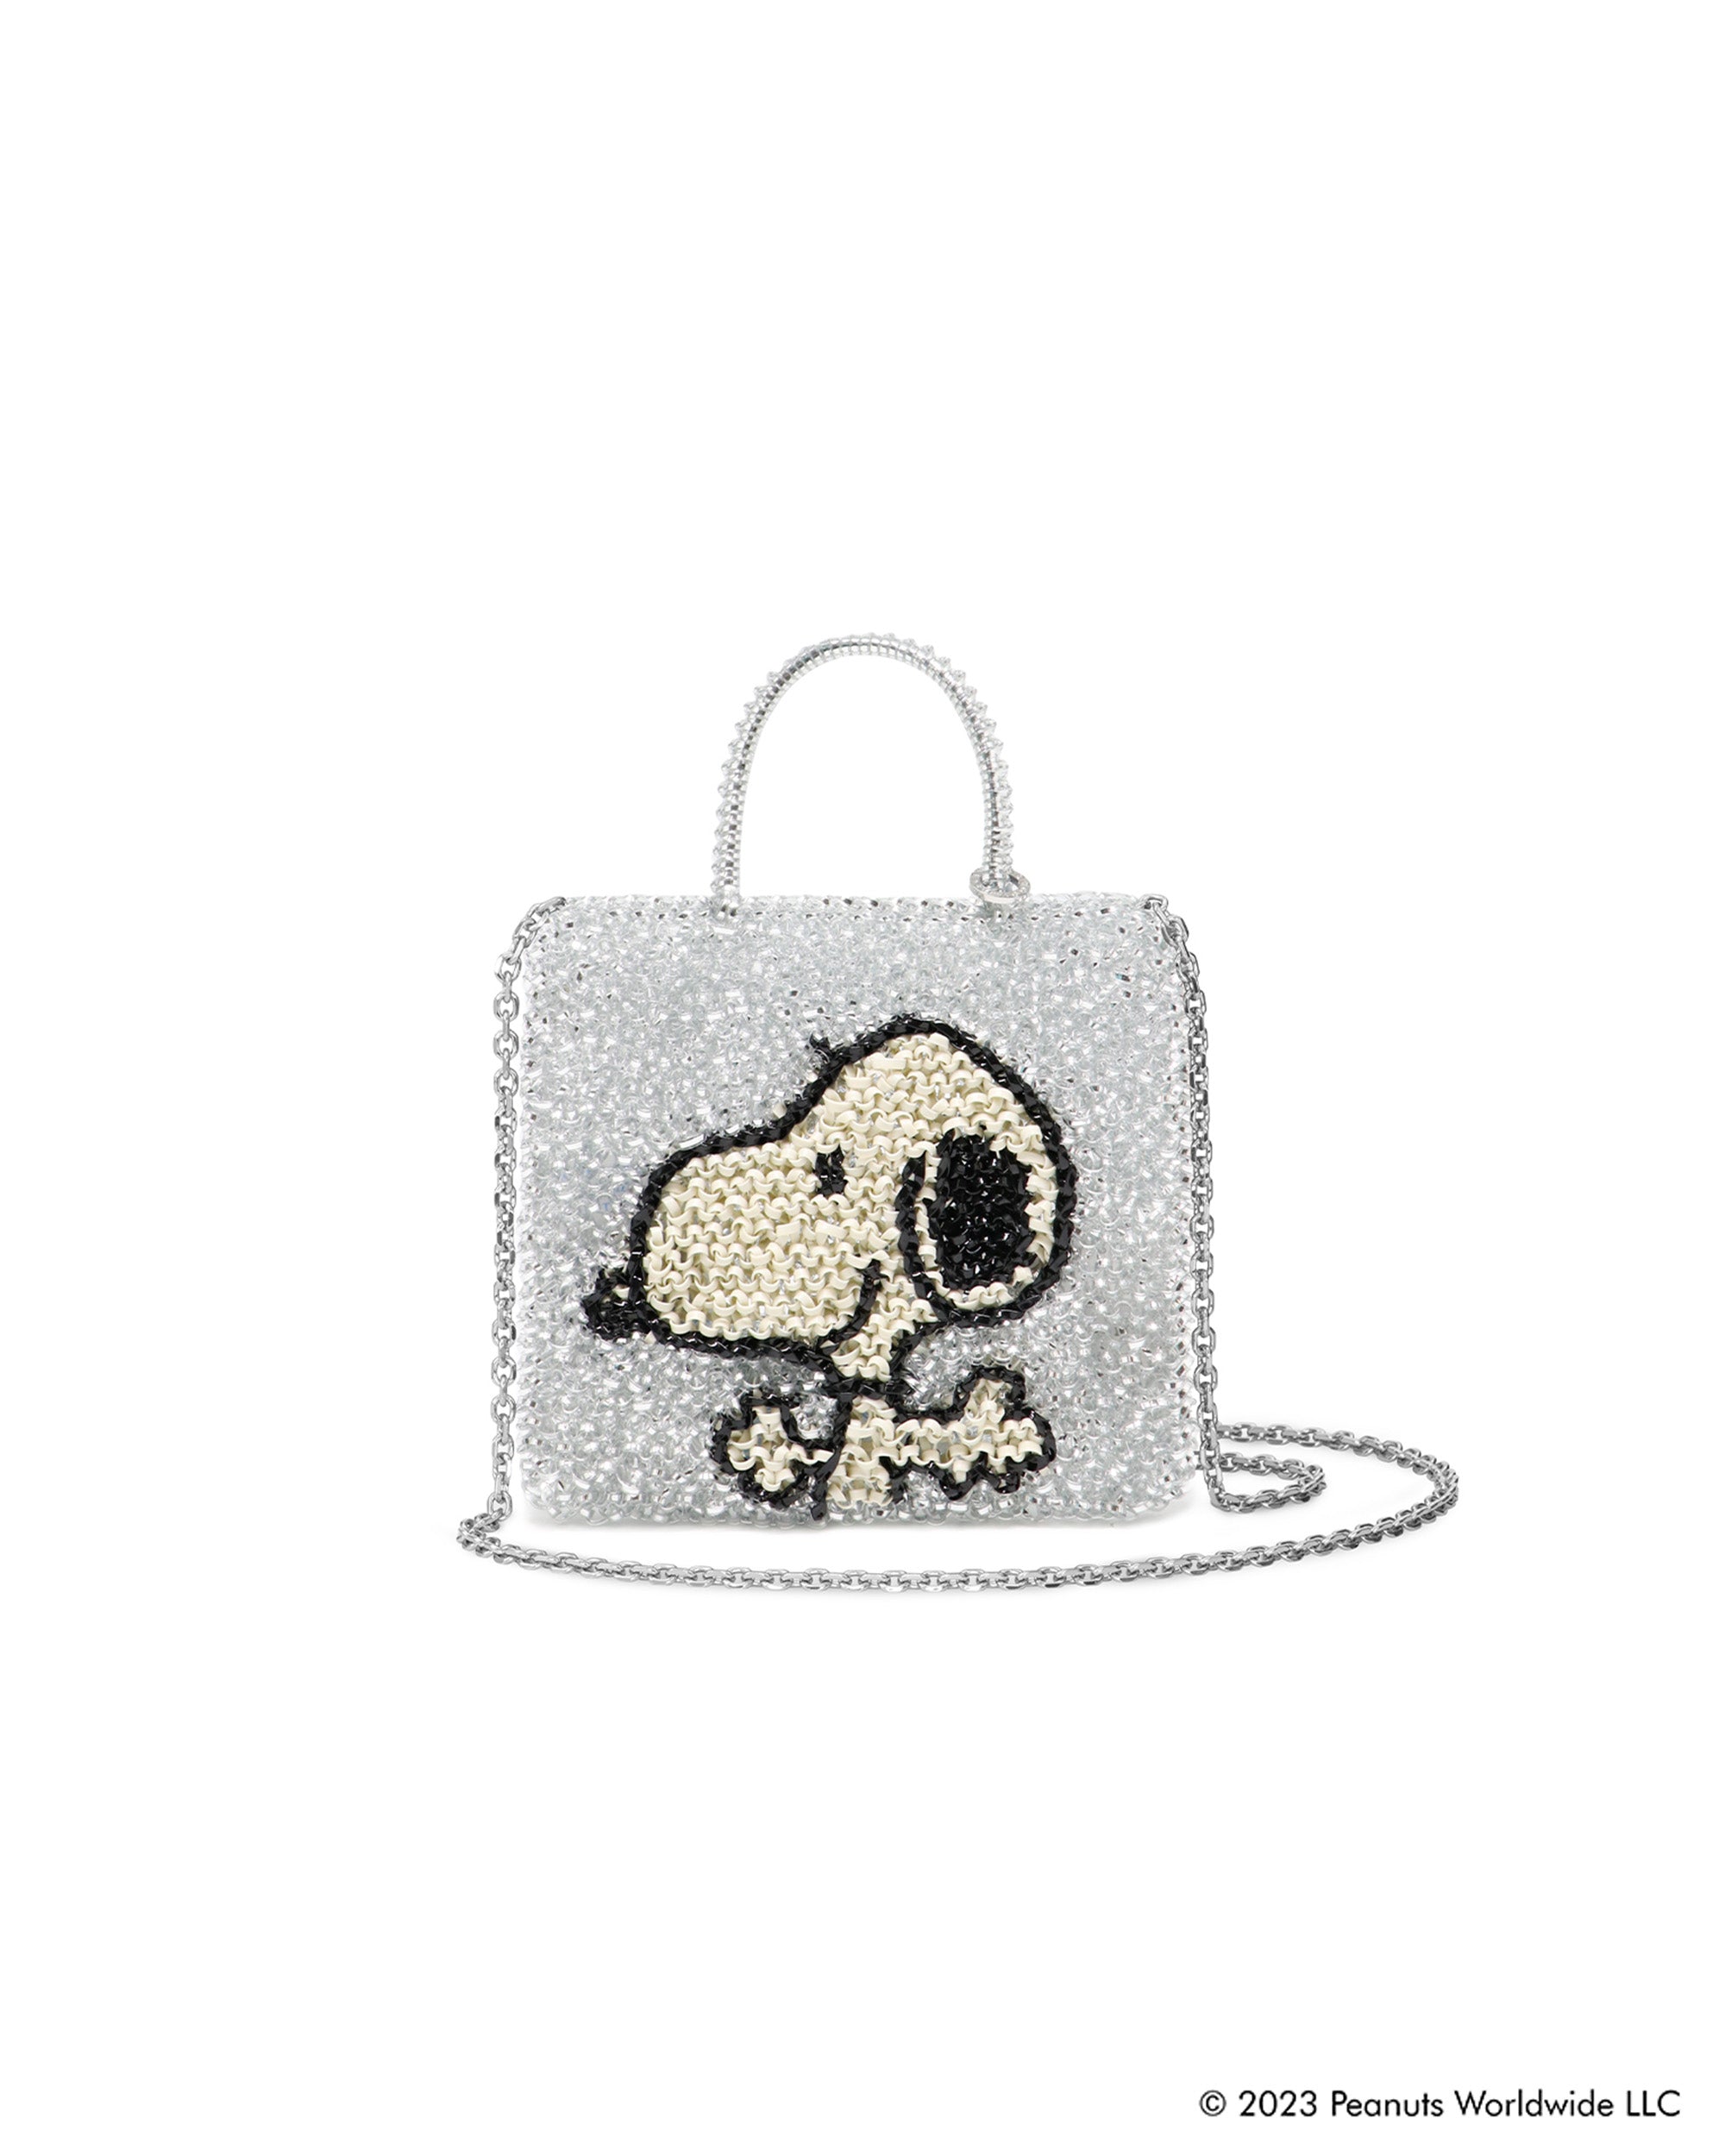 ANTEPRIMA WIREBAG x Snoopy Standard Miniatura Wirebag